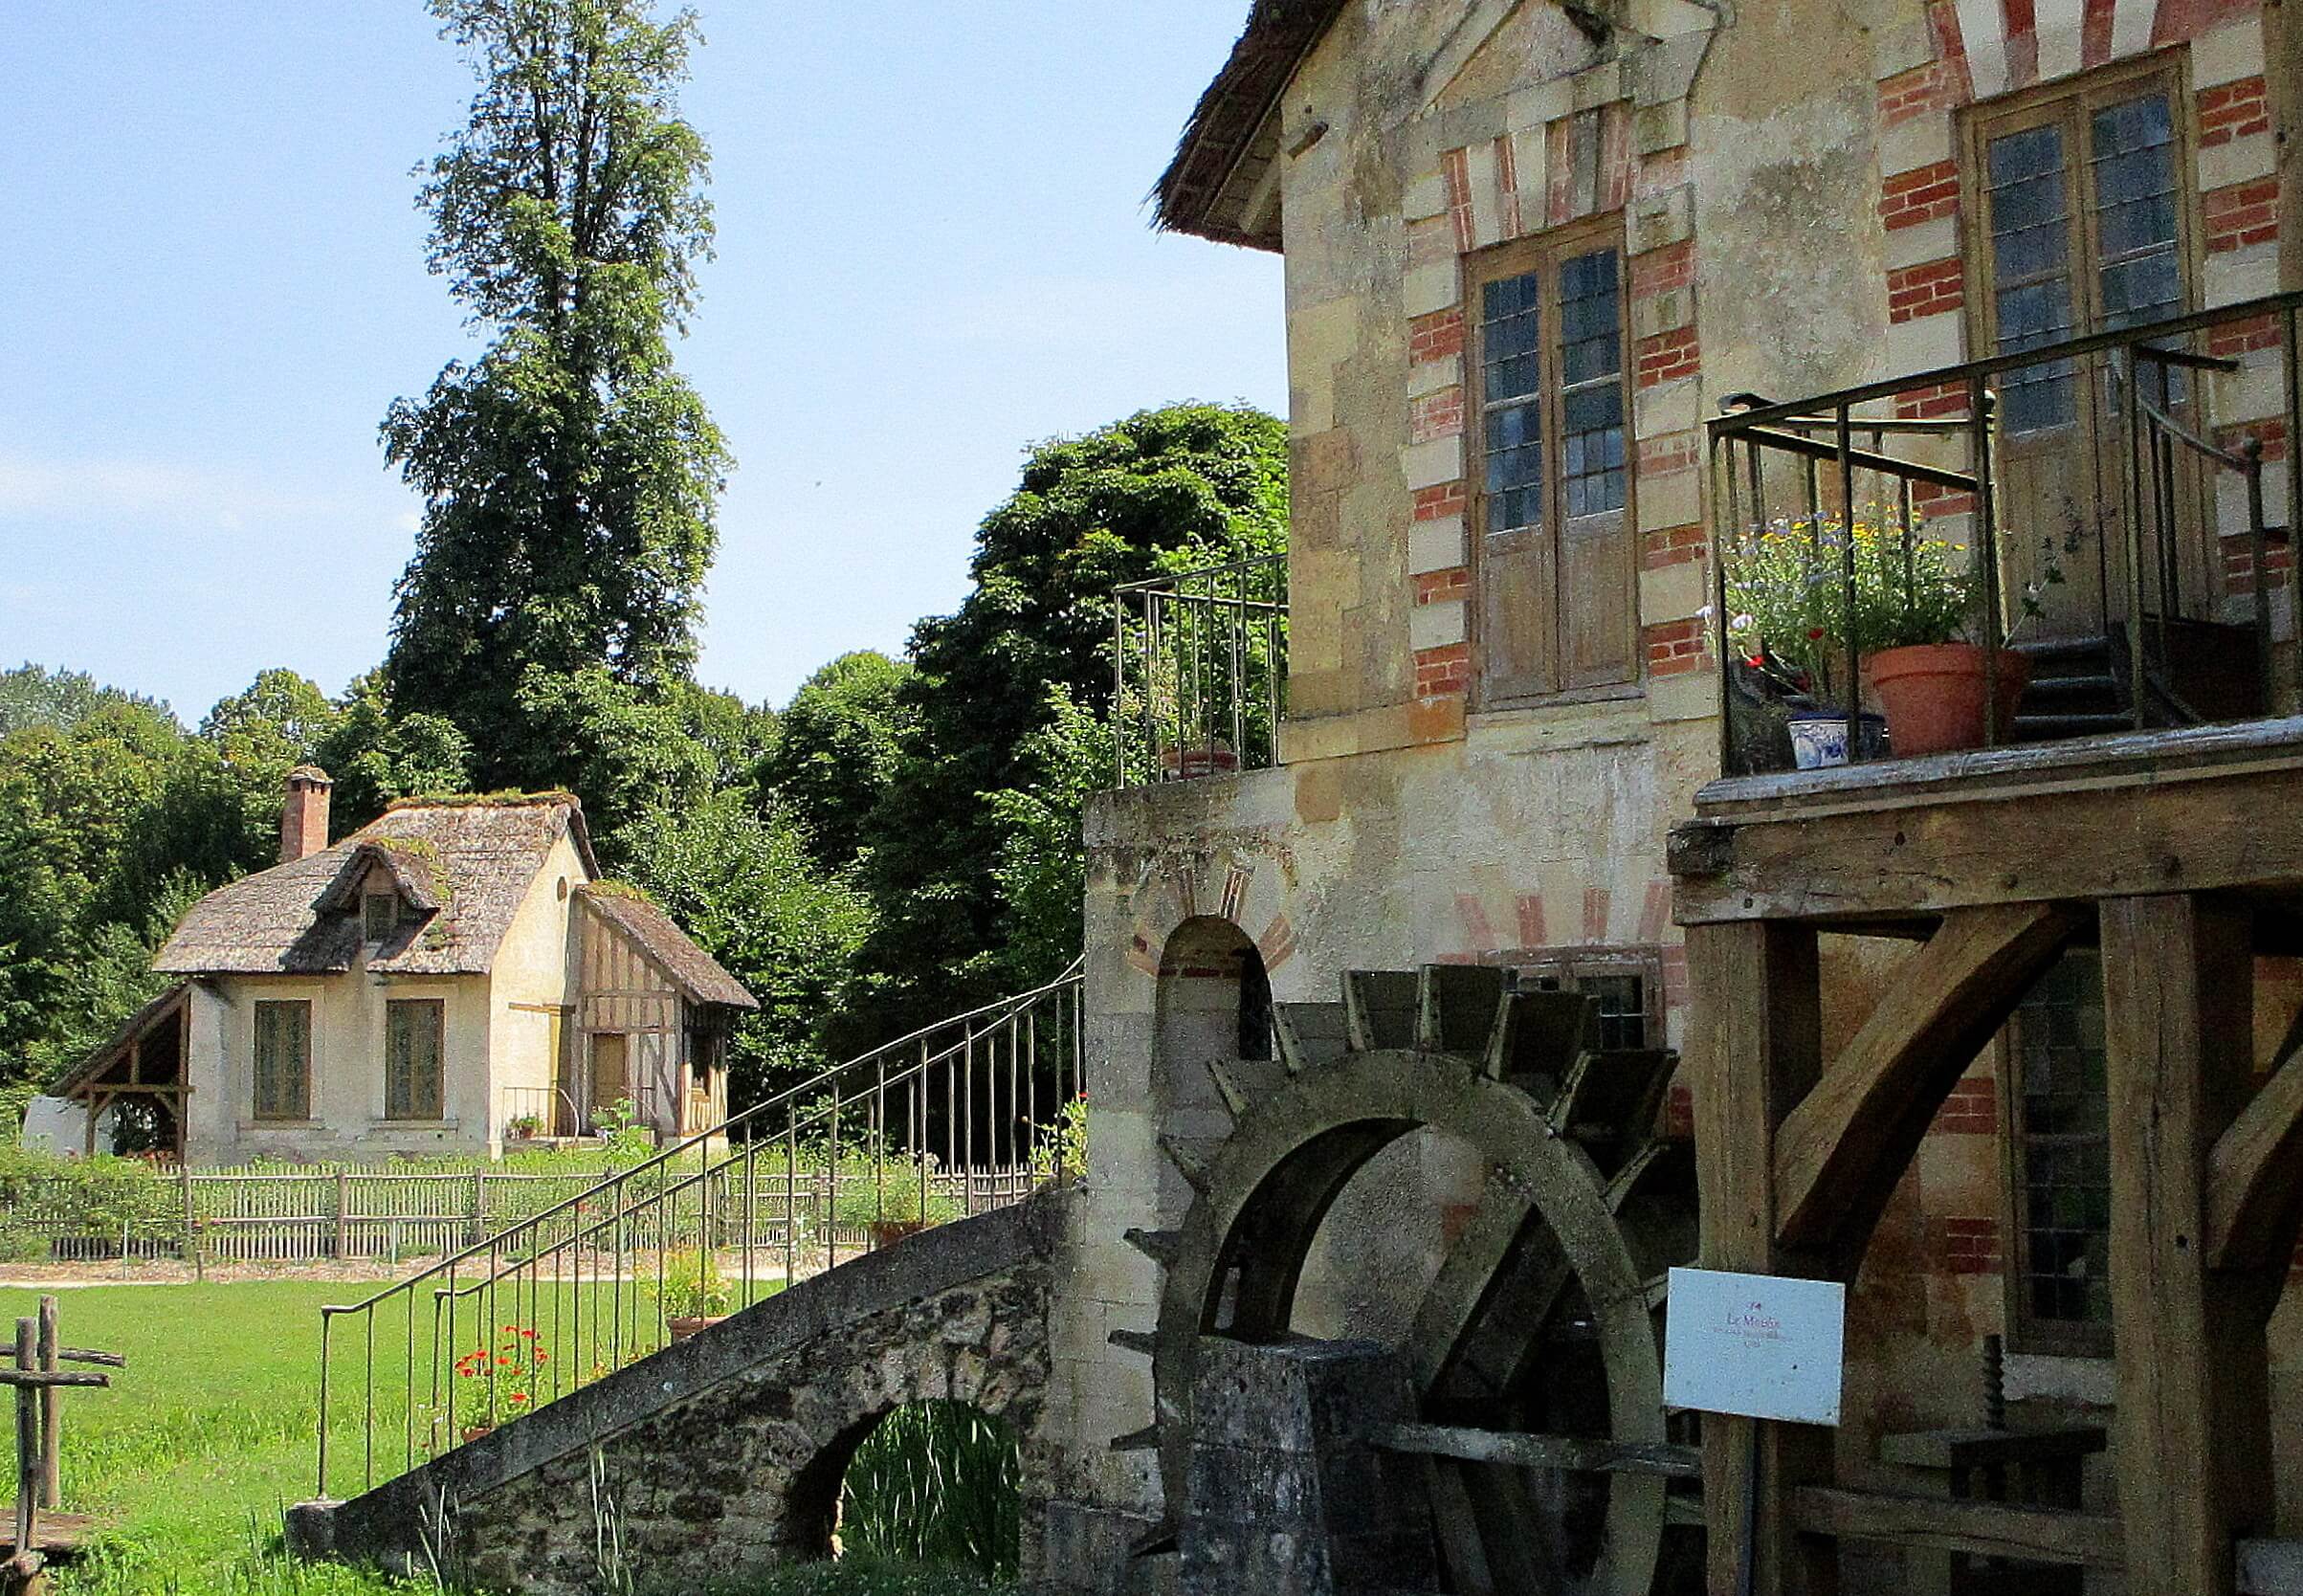 The Queen’s hamlet, watermill on Marie Antoinette's Estate